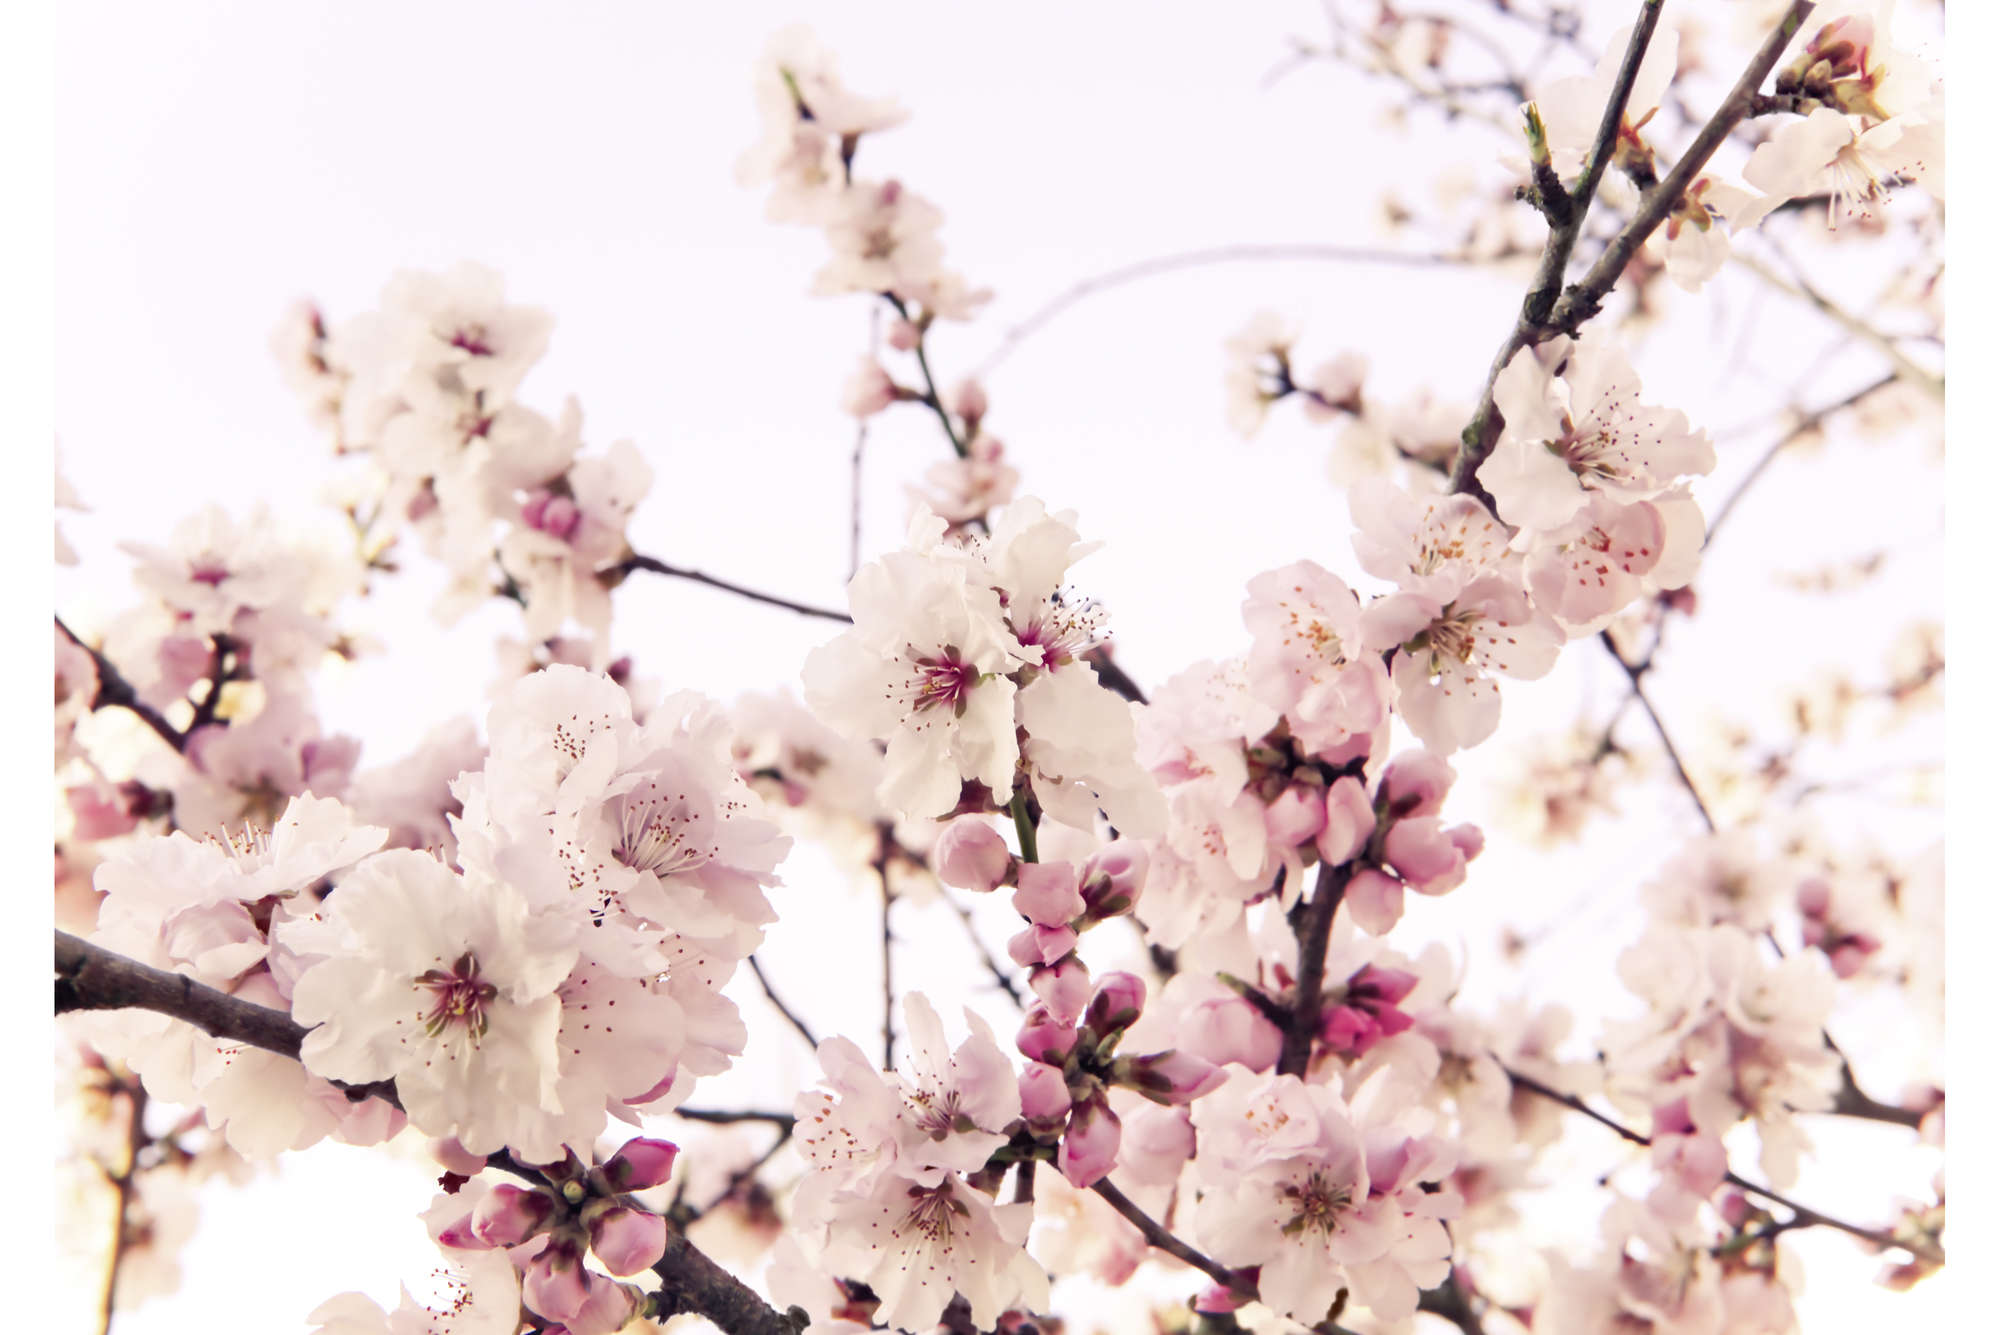             Natur Fototapete mit Kirschblüten – Perlmutt Glattvlies
        